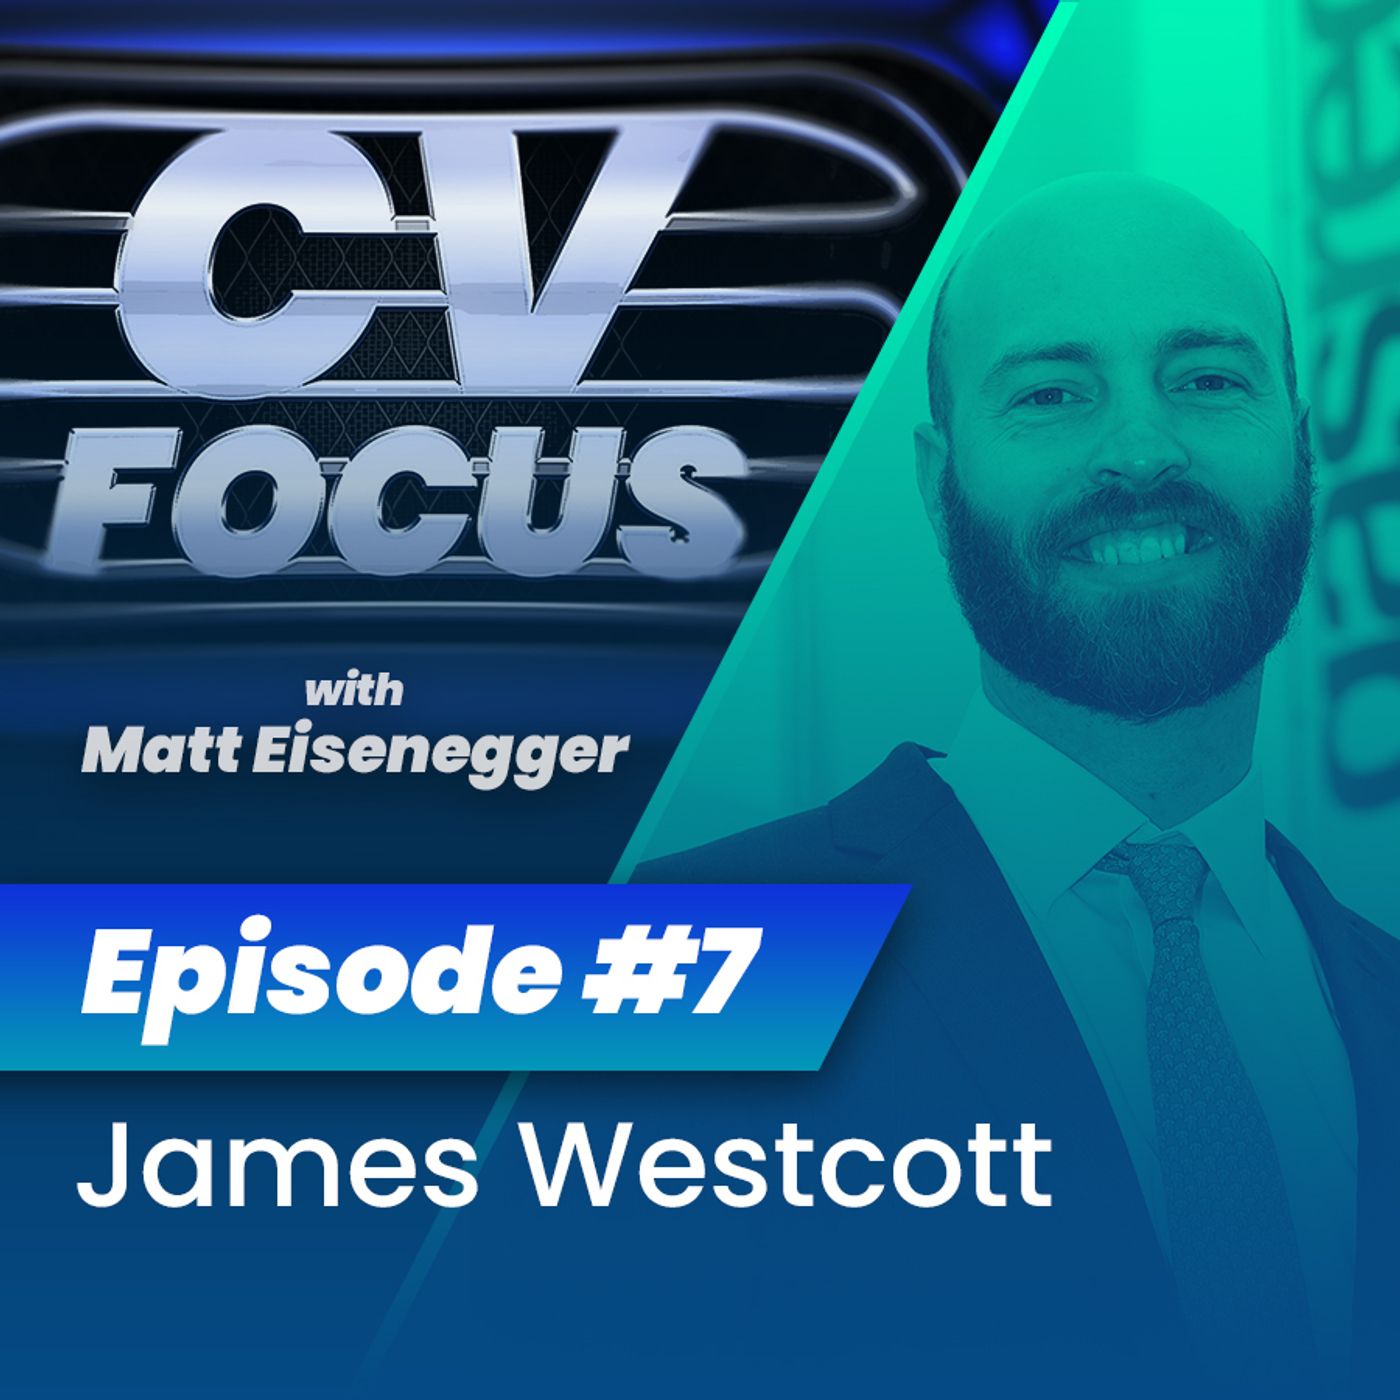 7: CV Focus episode 7 - James Westcott